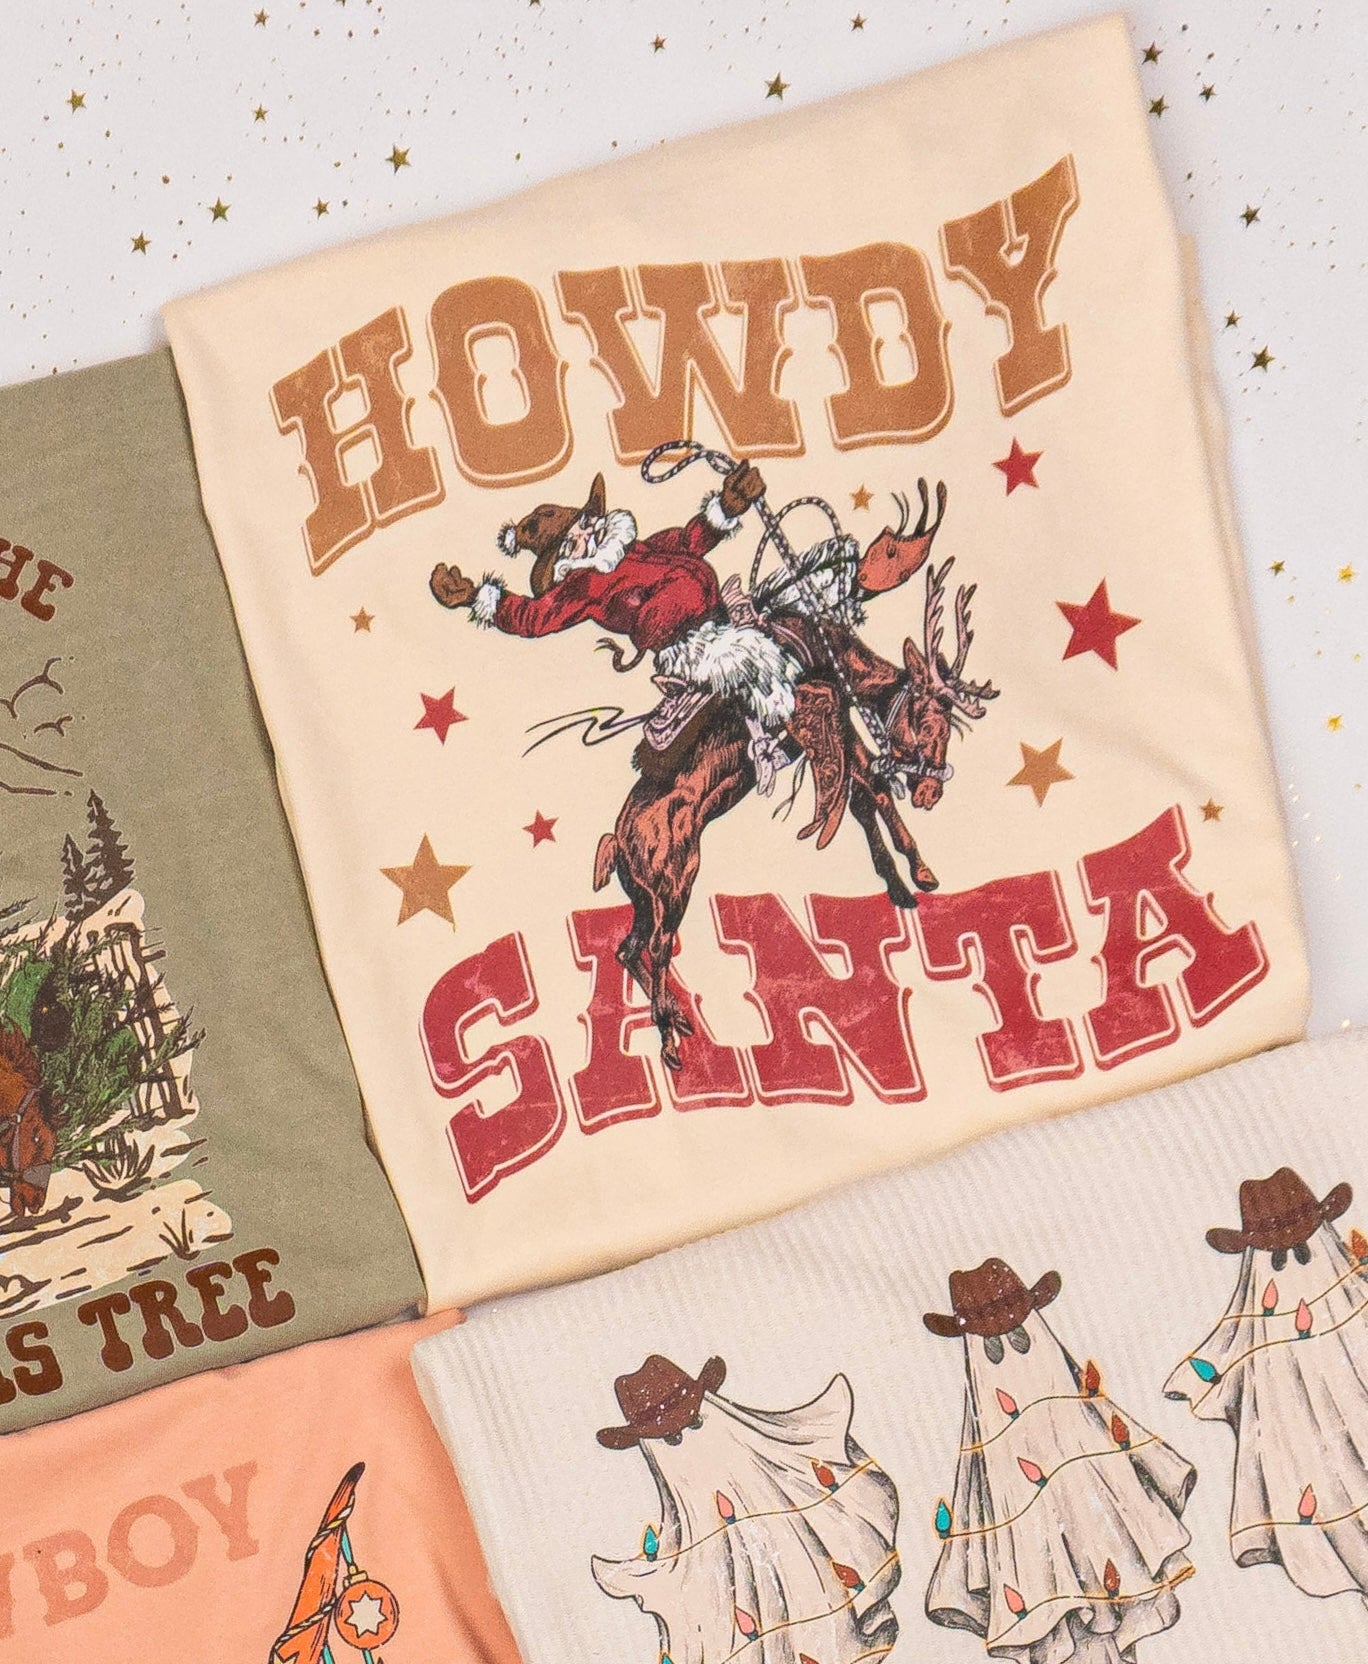 Howdy Santa (Rodeo) - Tee (Vintage Natural, Long Sleeve)